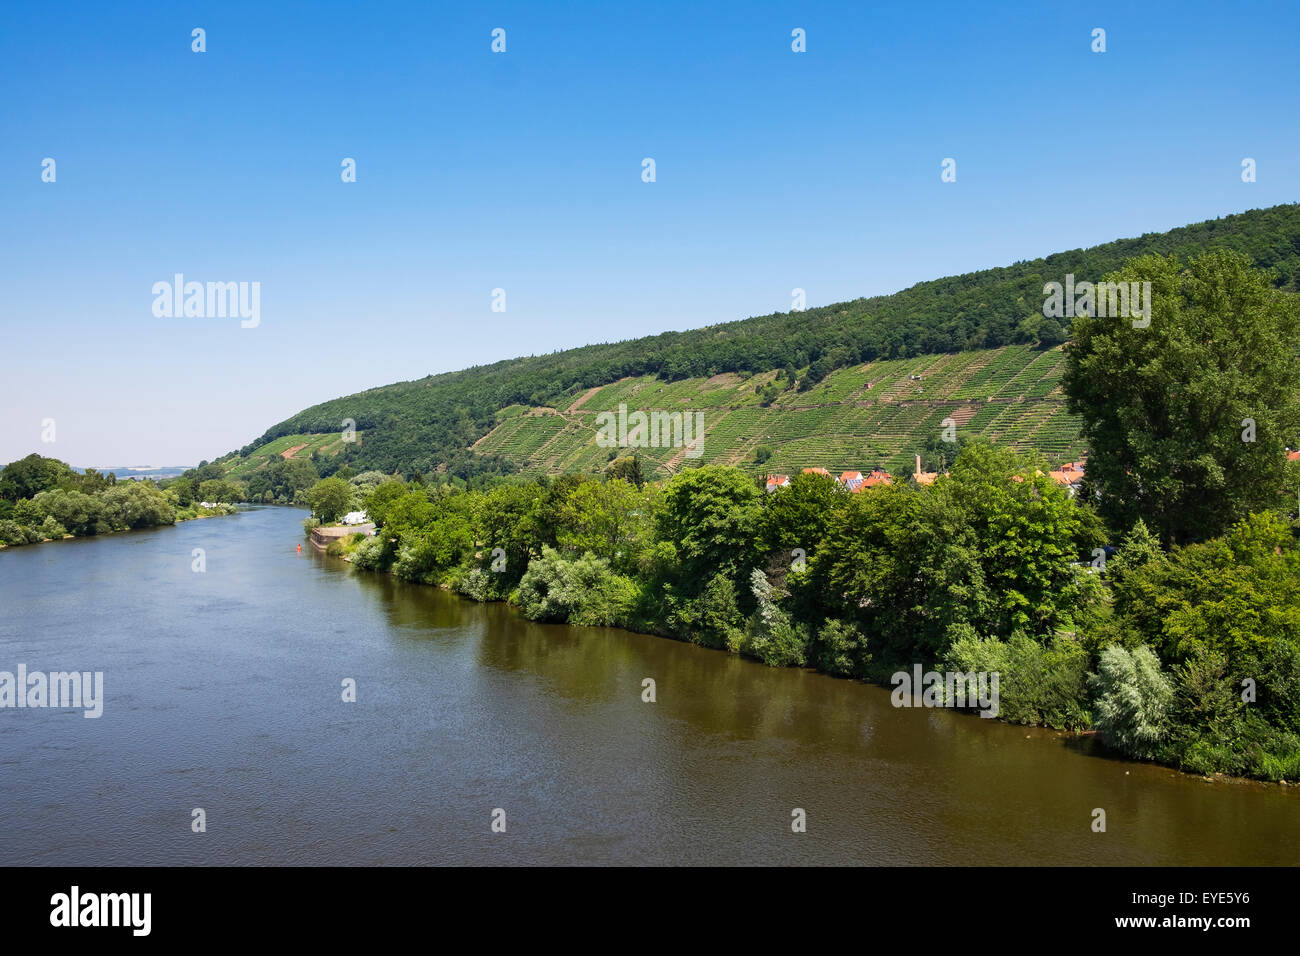 River Main and vineyards, Klingenberg am Main, Lower Franconia, Franconia, Bavaria, Germany Stock Photo